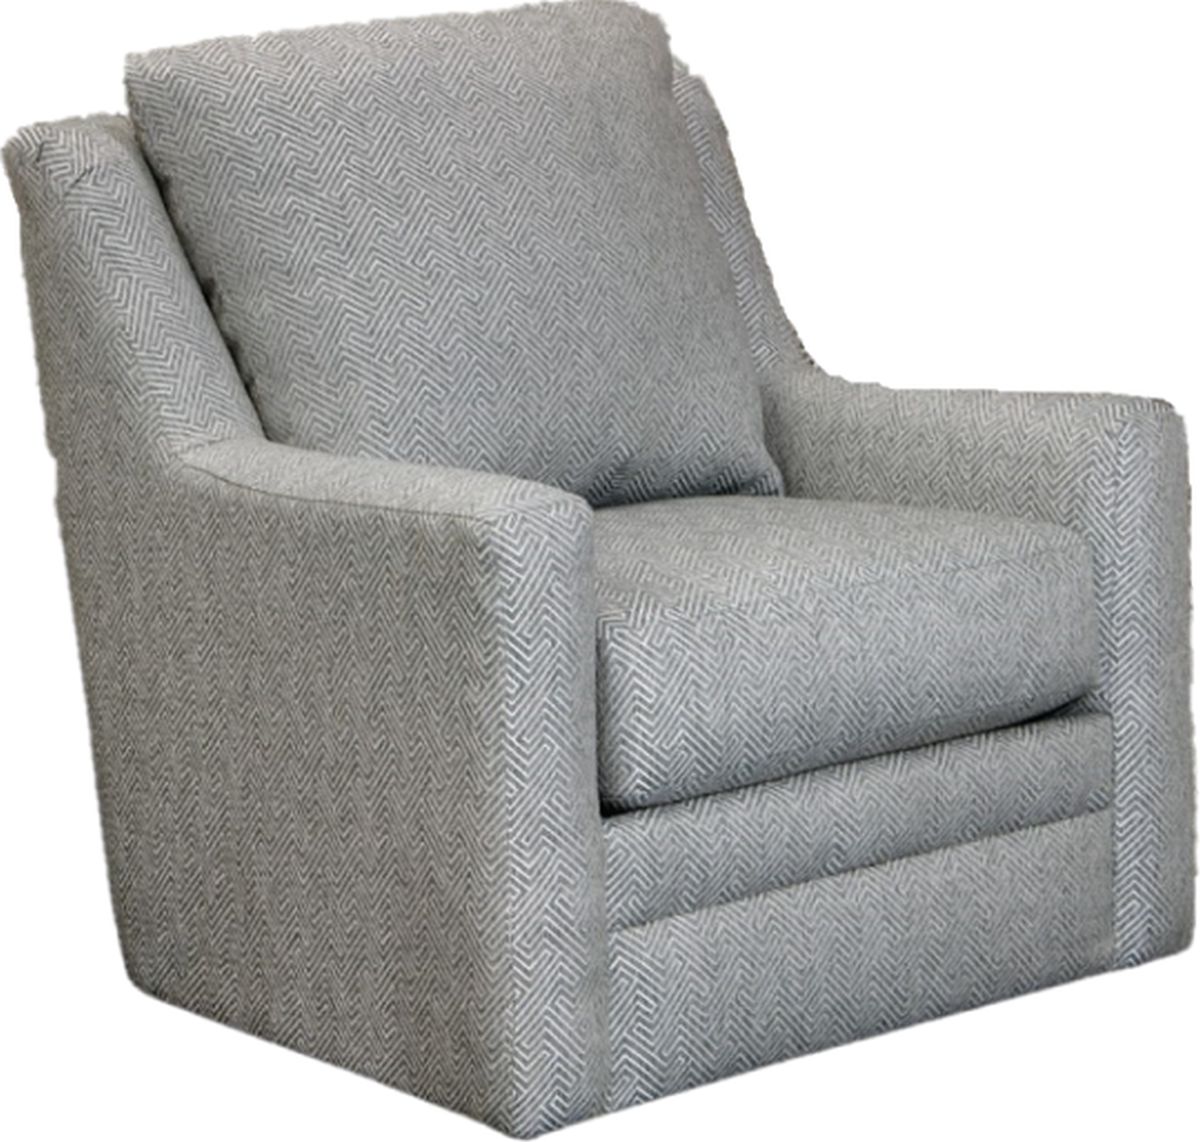 Jackson Furniture Zeller Sandstone Swivel Chair